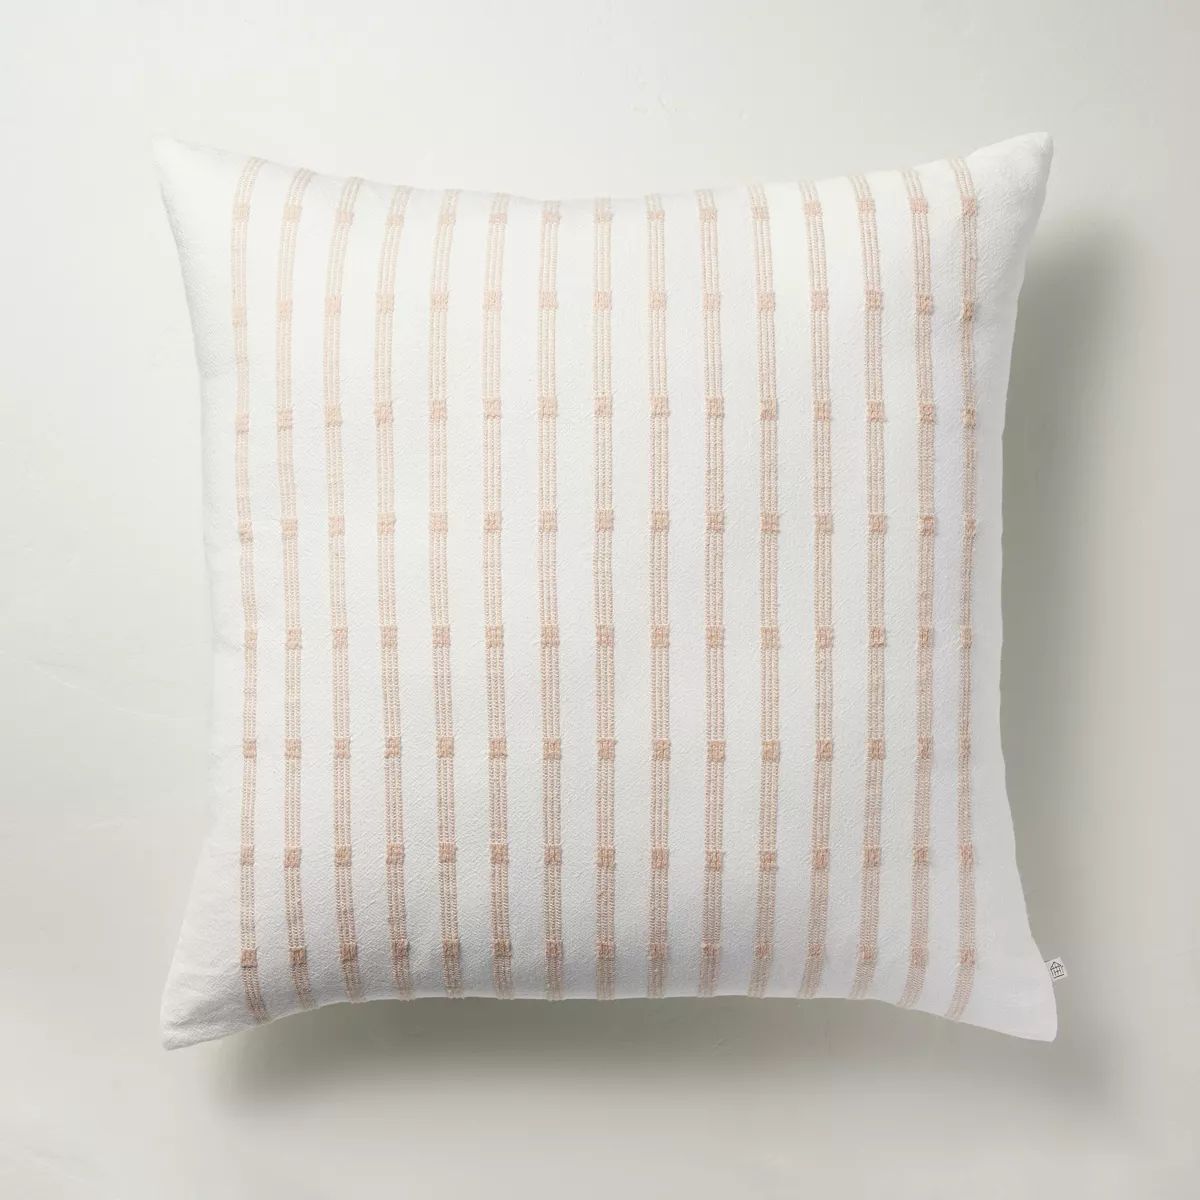 24"x24" Textured Rail Stripe Square Throw Pillow Sage Cream/Tan - Hearth & Hand™ with Magnolia | Target